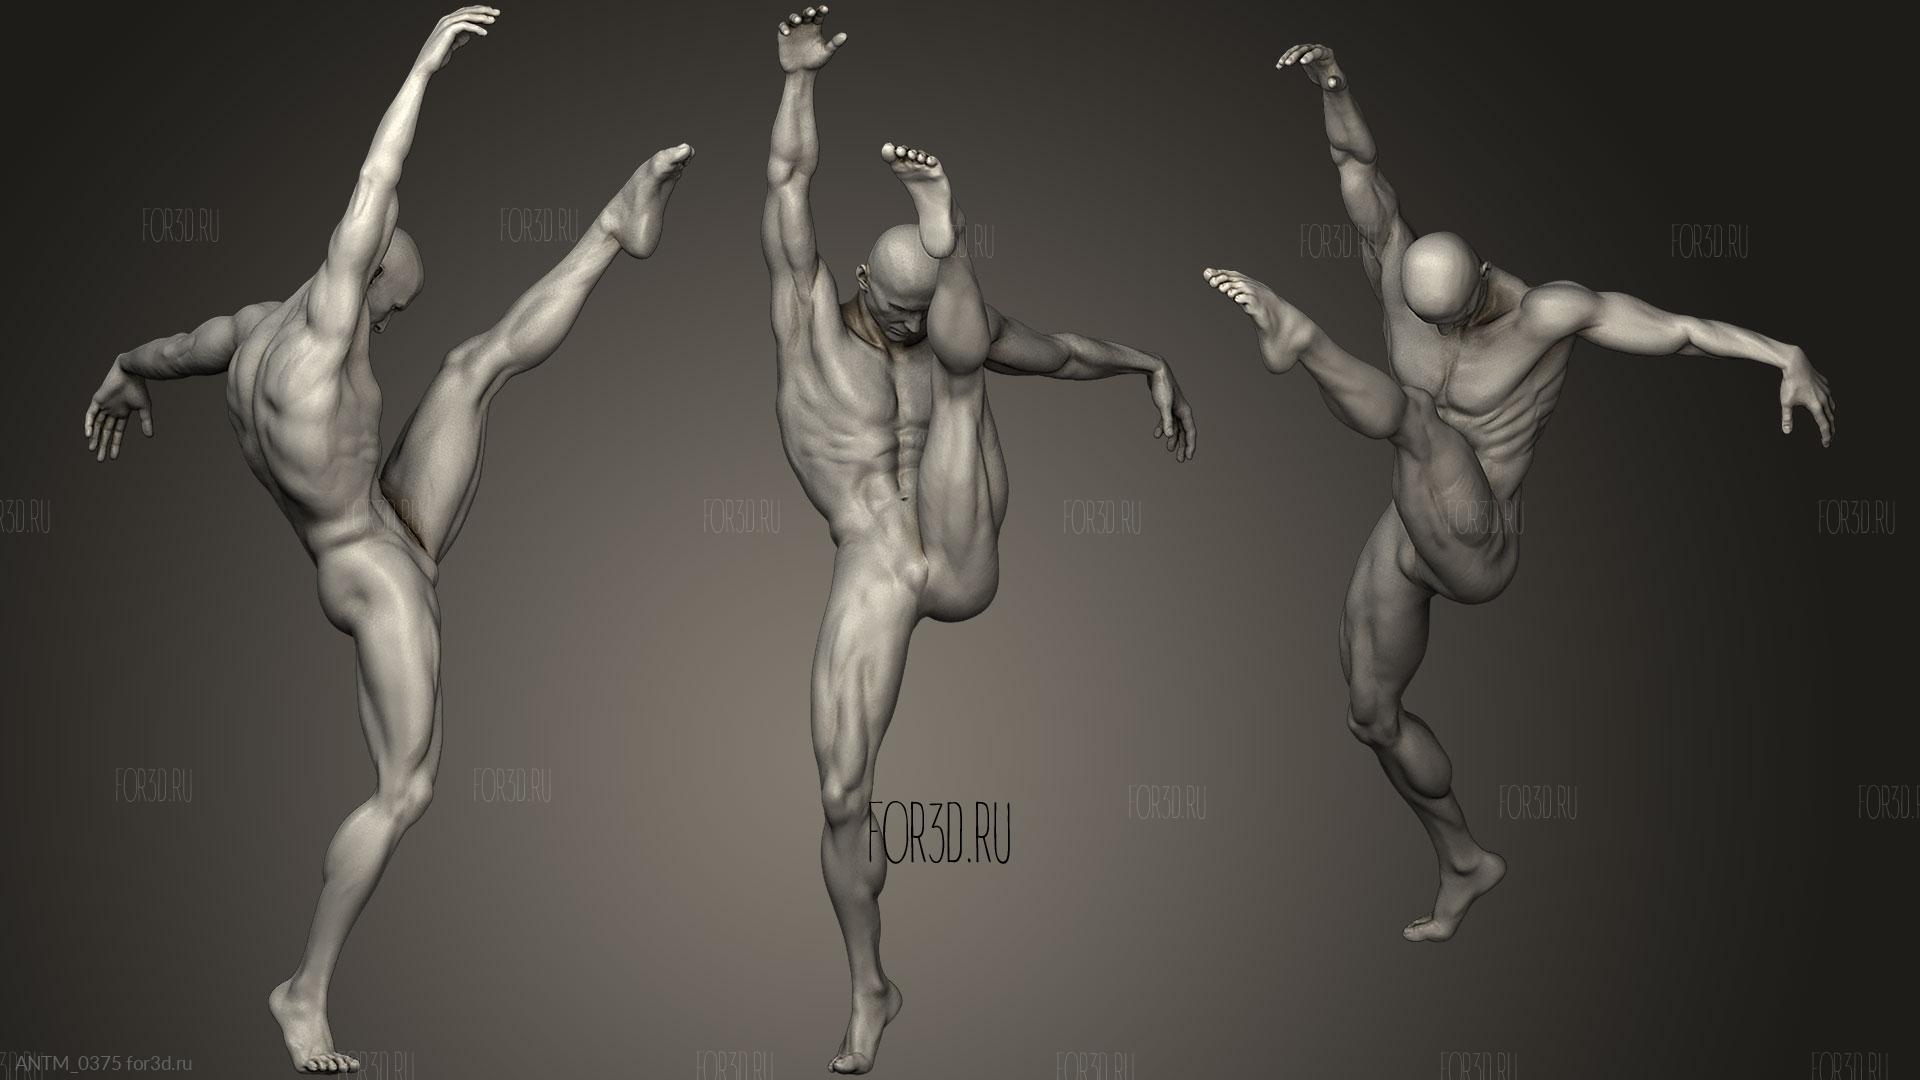 Ballroom dancers in dancing poses - Stock Image - Everypixel